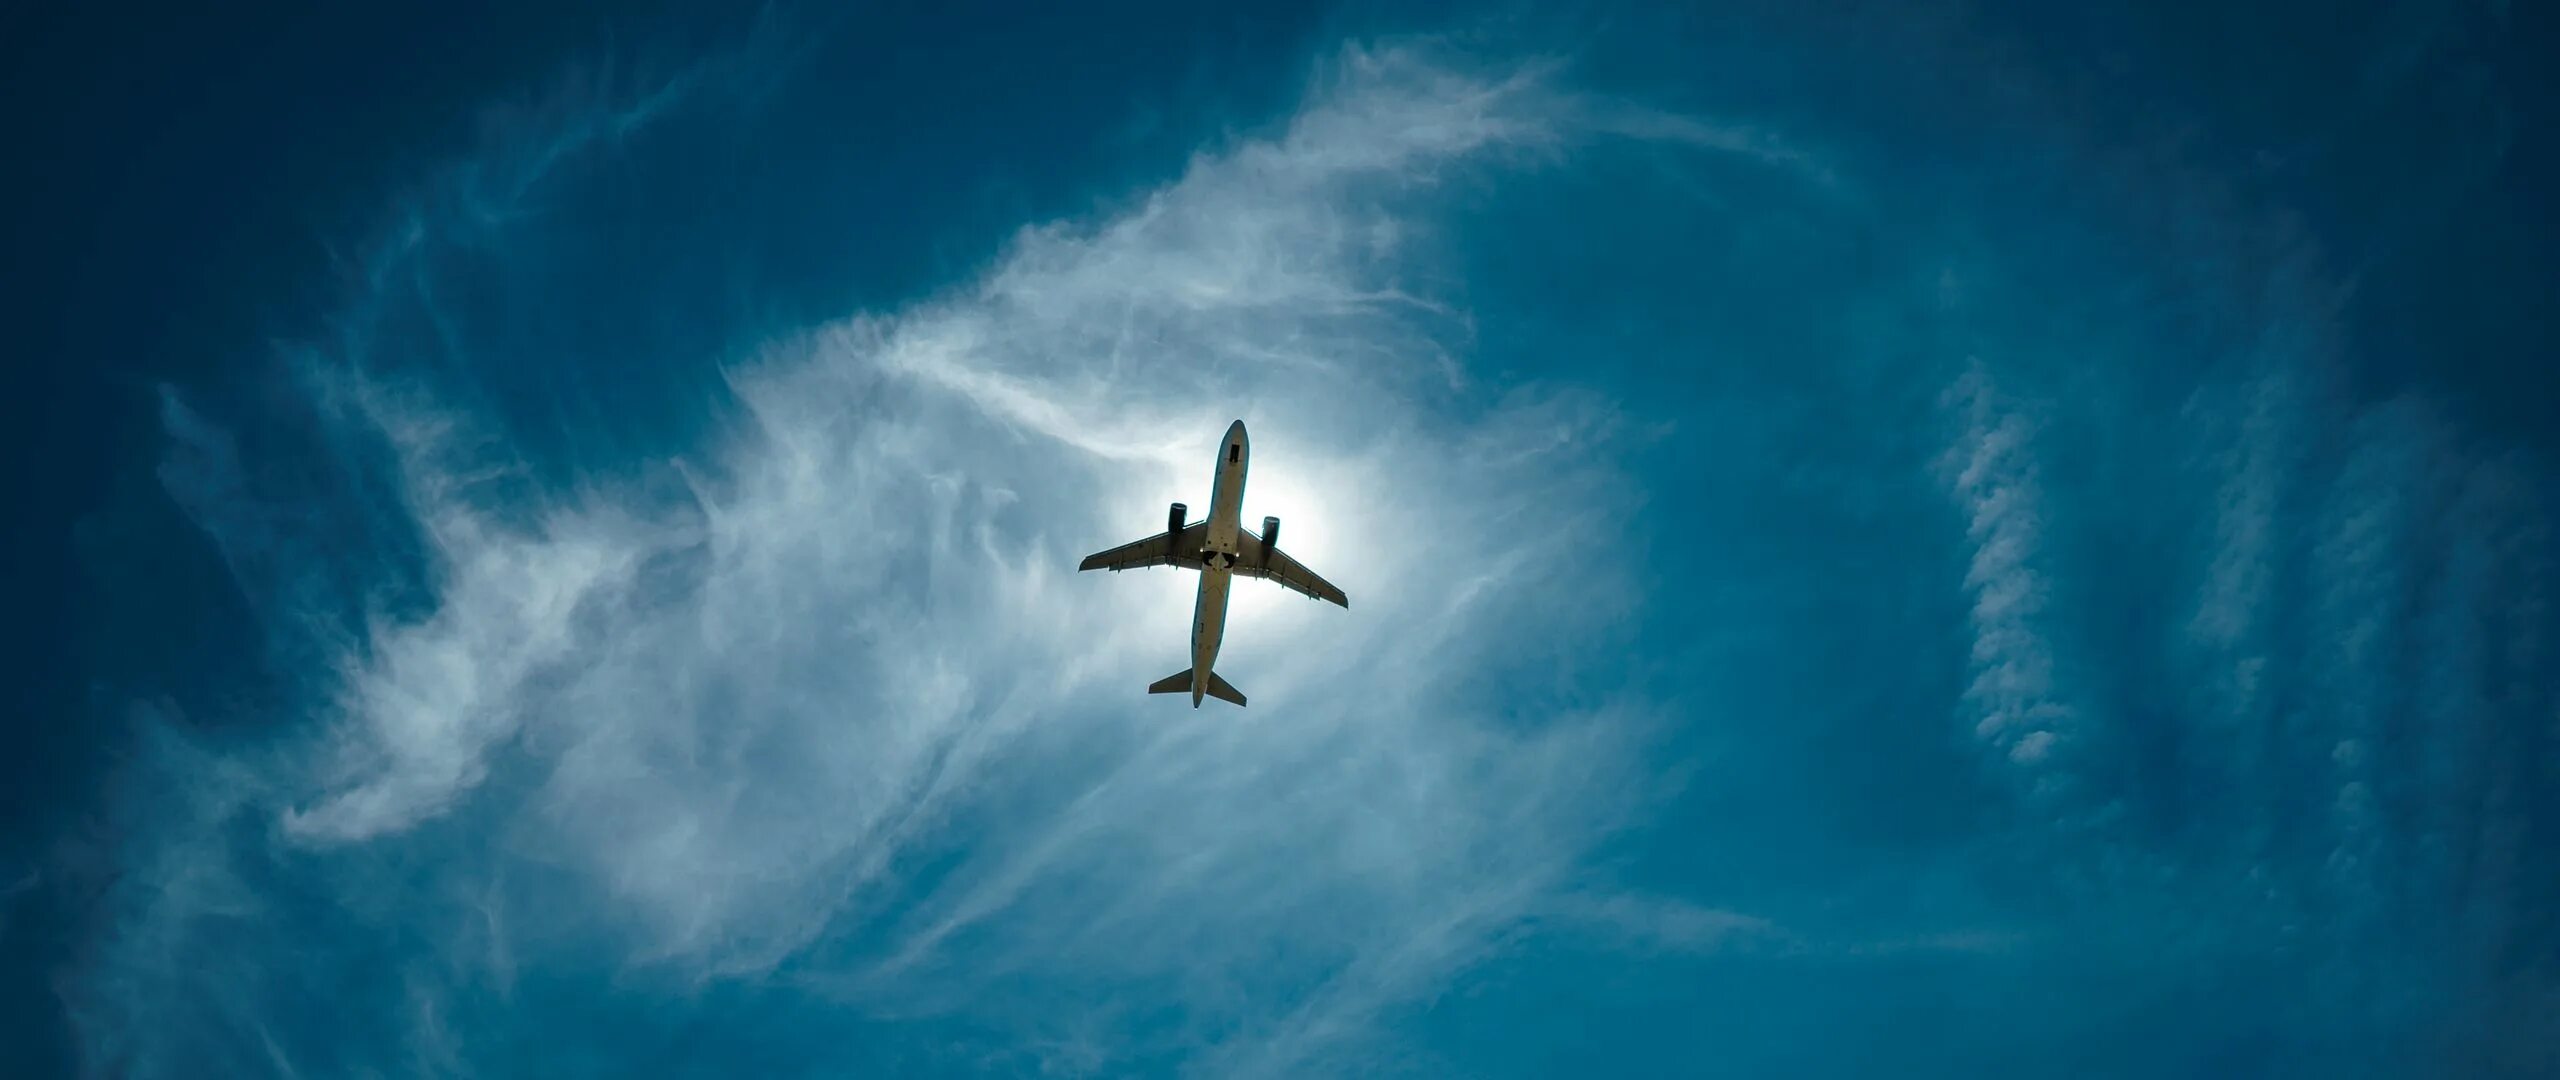 Самолет вид снизу. Самолет в небе вид снизу. Самолет в небе. Самолет в небе вид сверху.